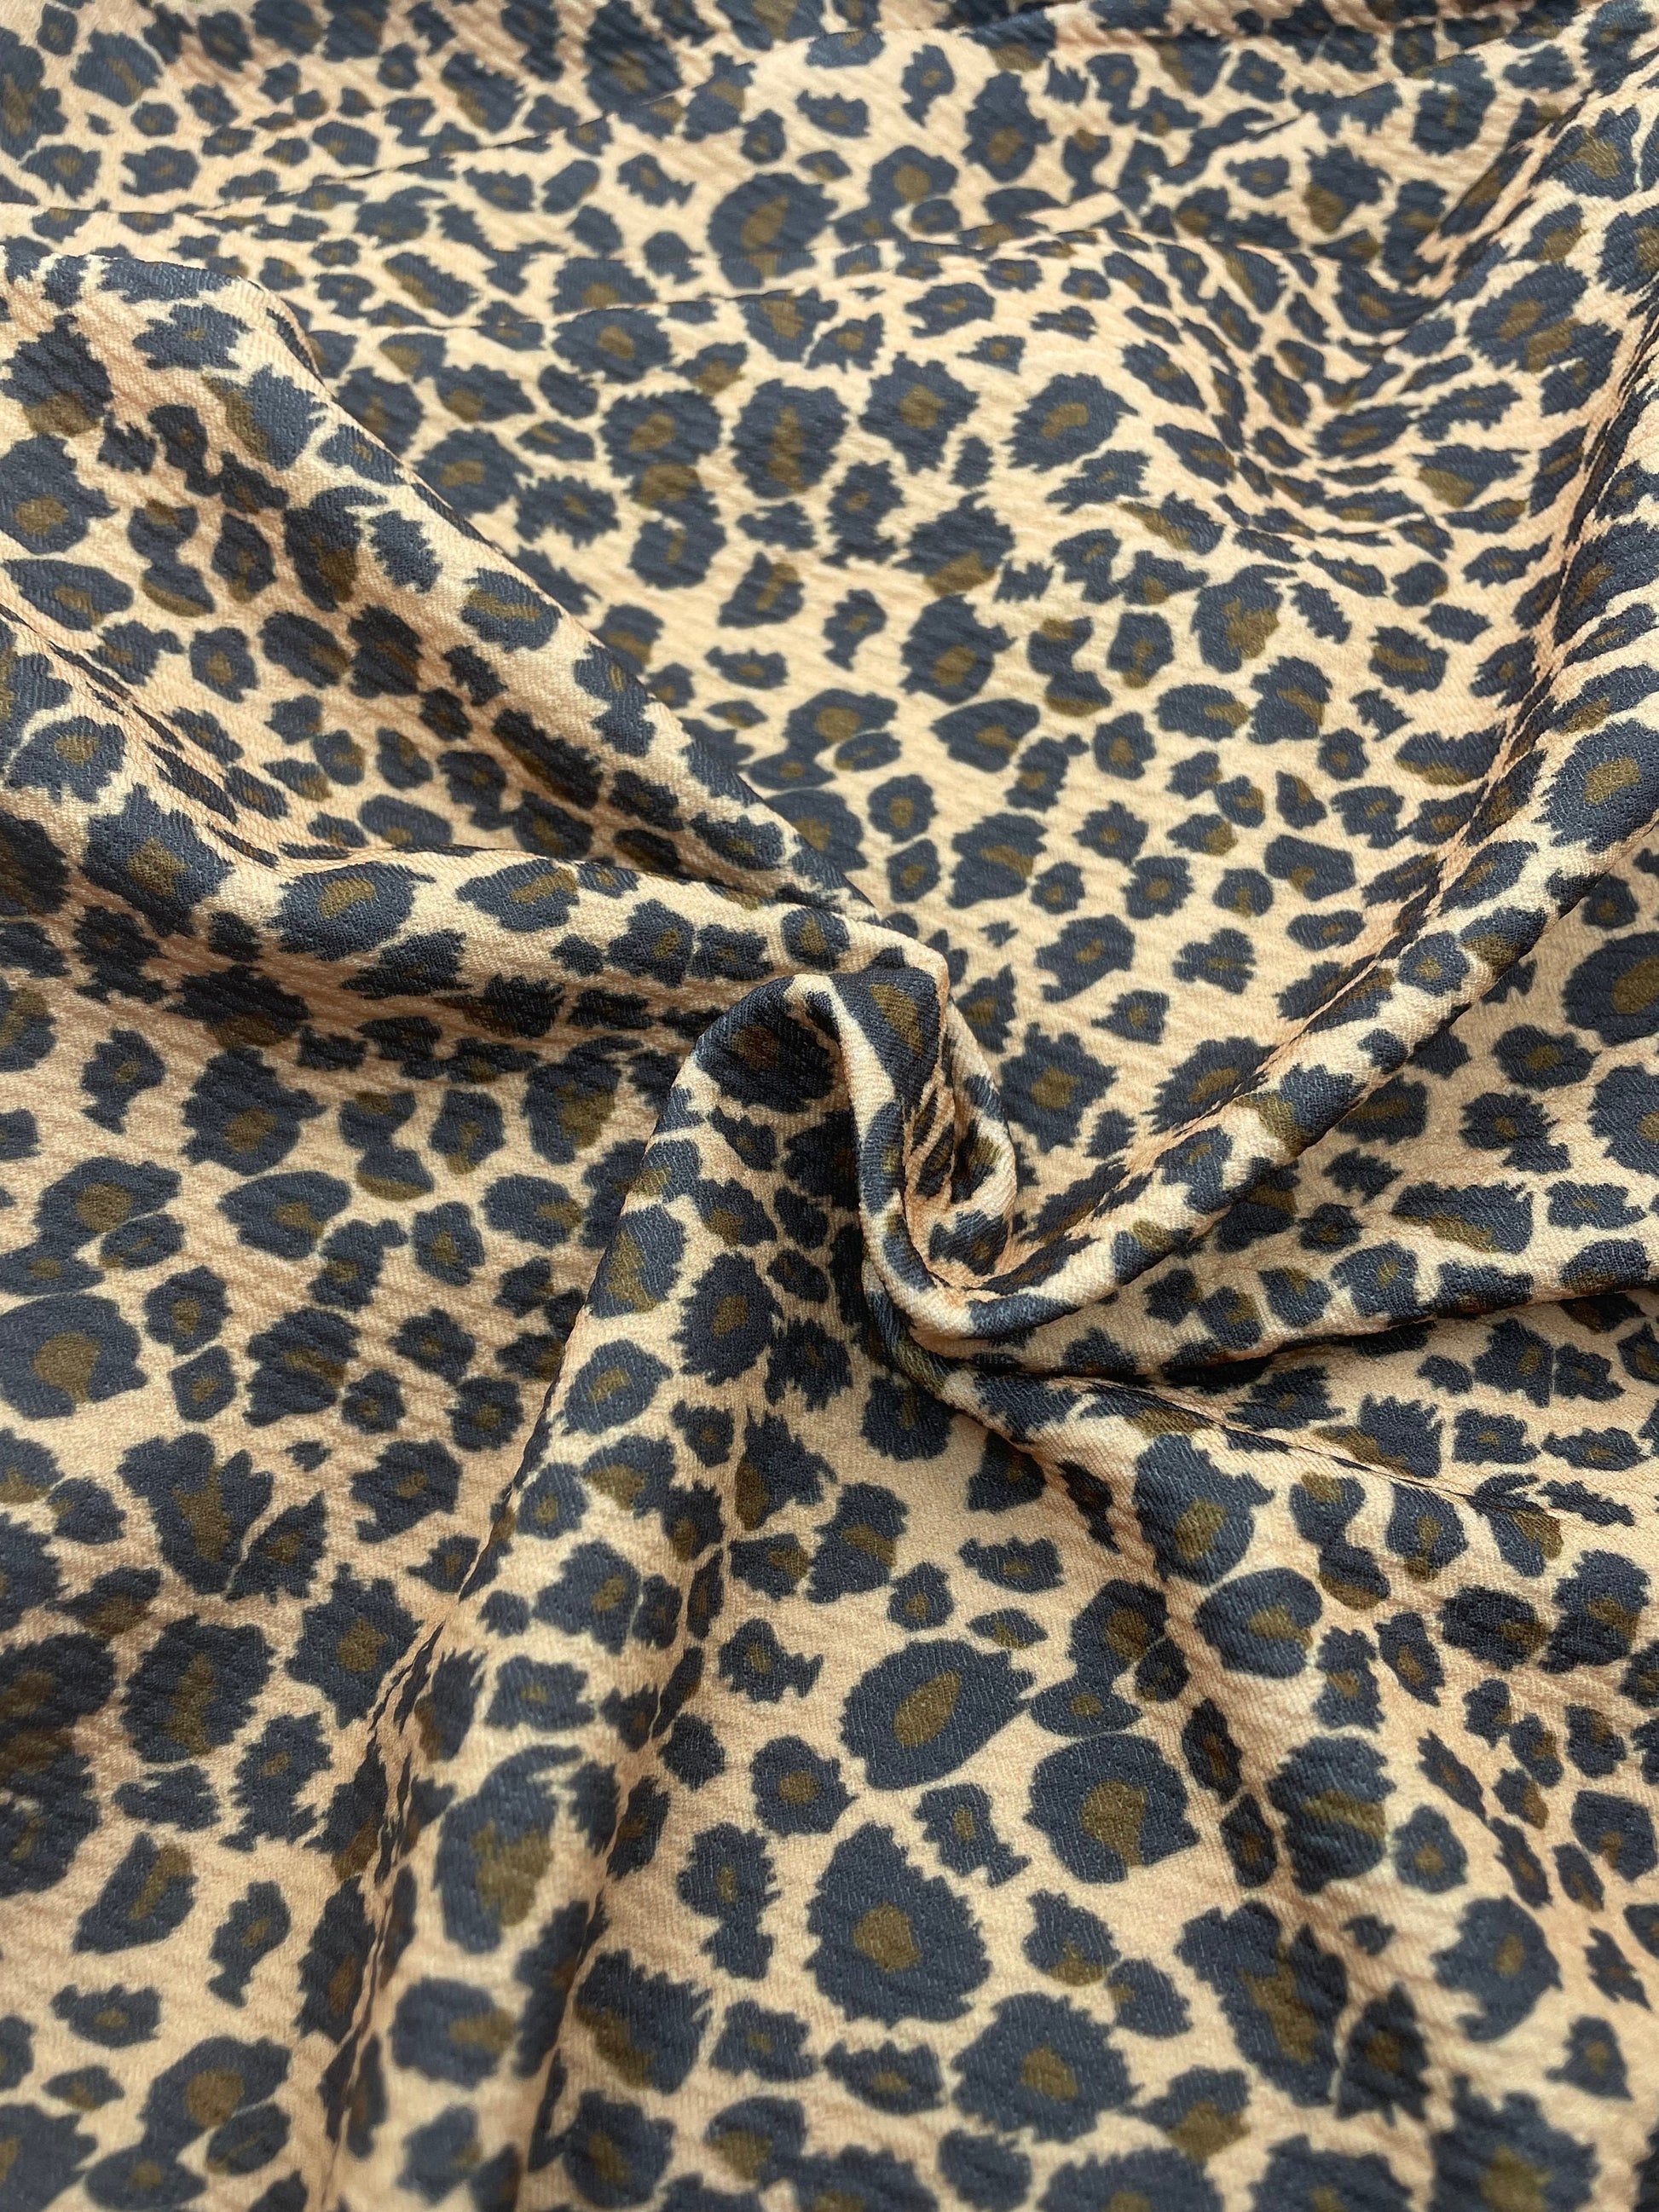 Cheetah/Leopard Print Textured Bullet Liverpool Fabric TheFabricDude